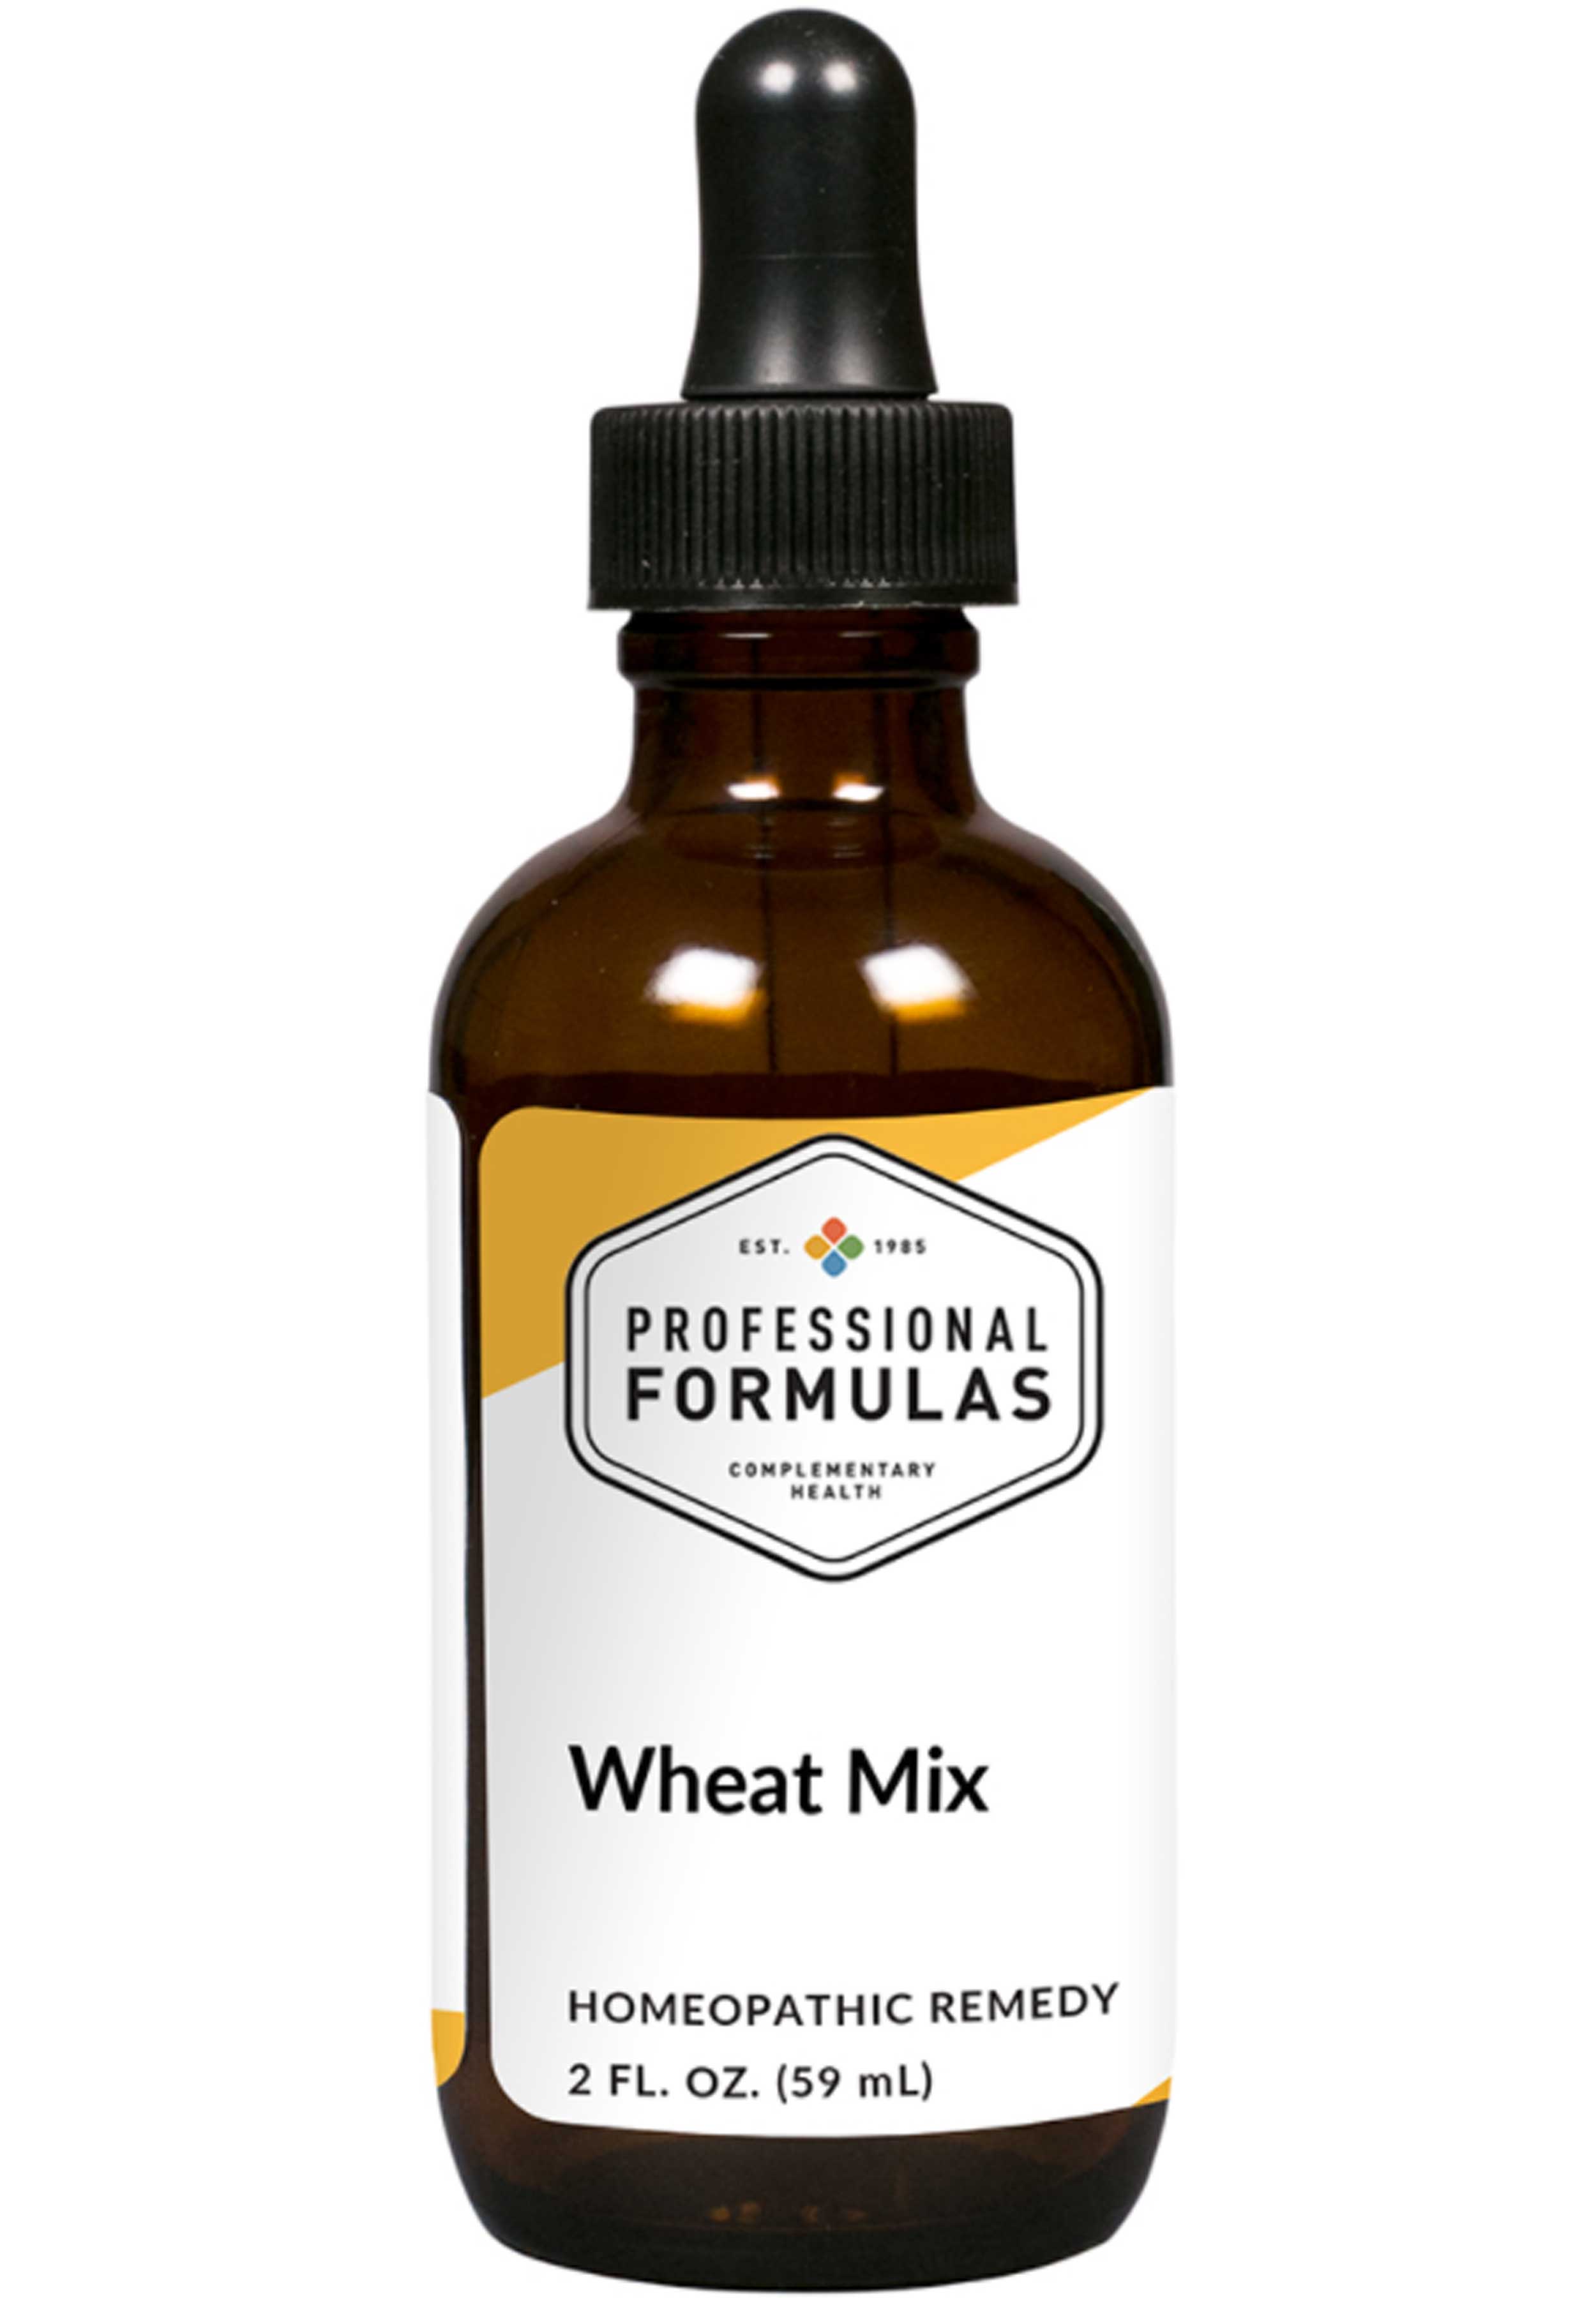 Professional Formulas Wheat Mix